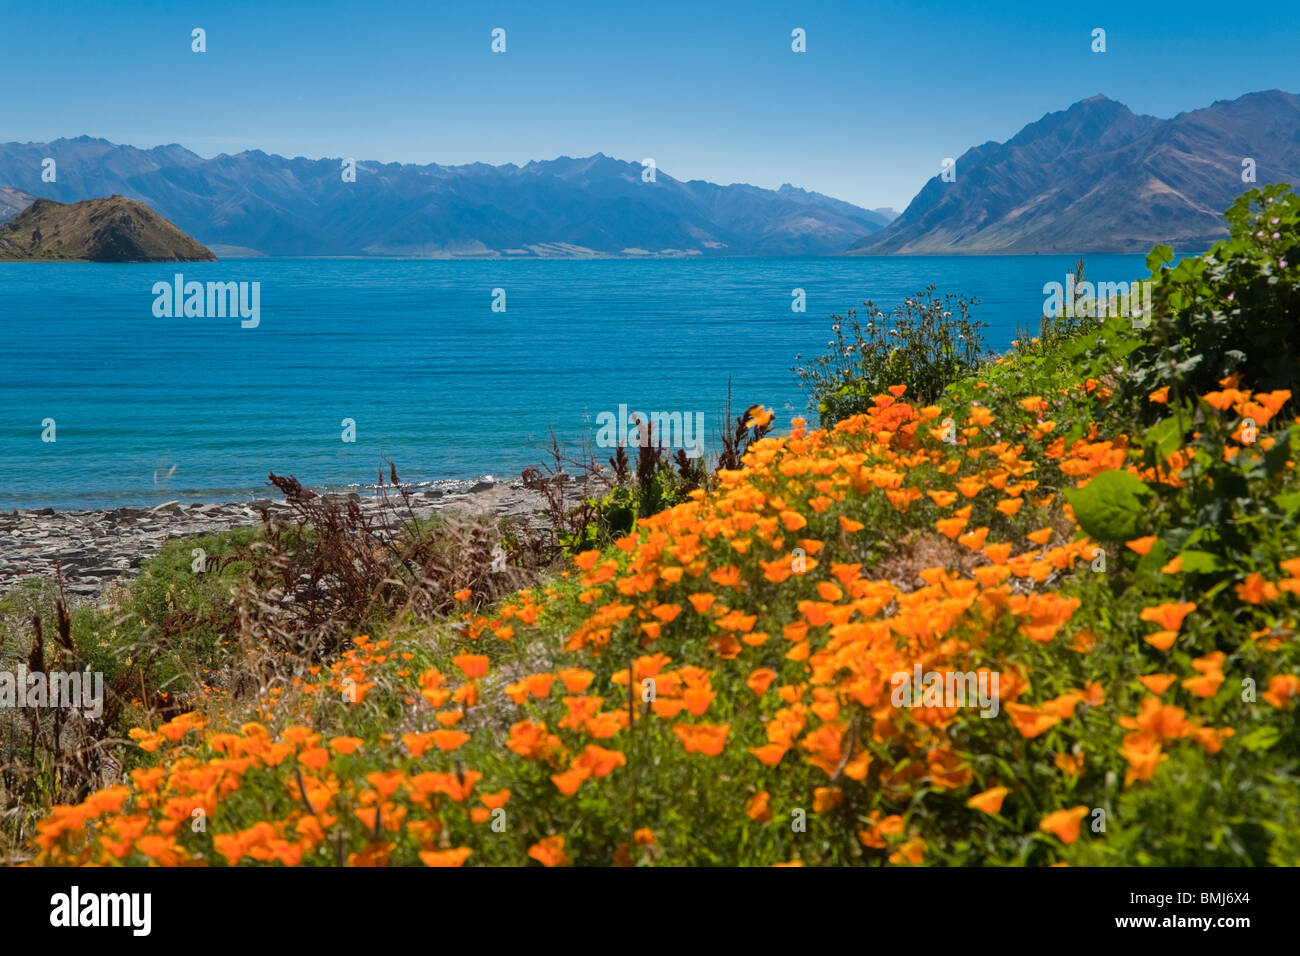 Views over Lake Hawea, South Island, New Zealand. Stock Photo